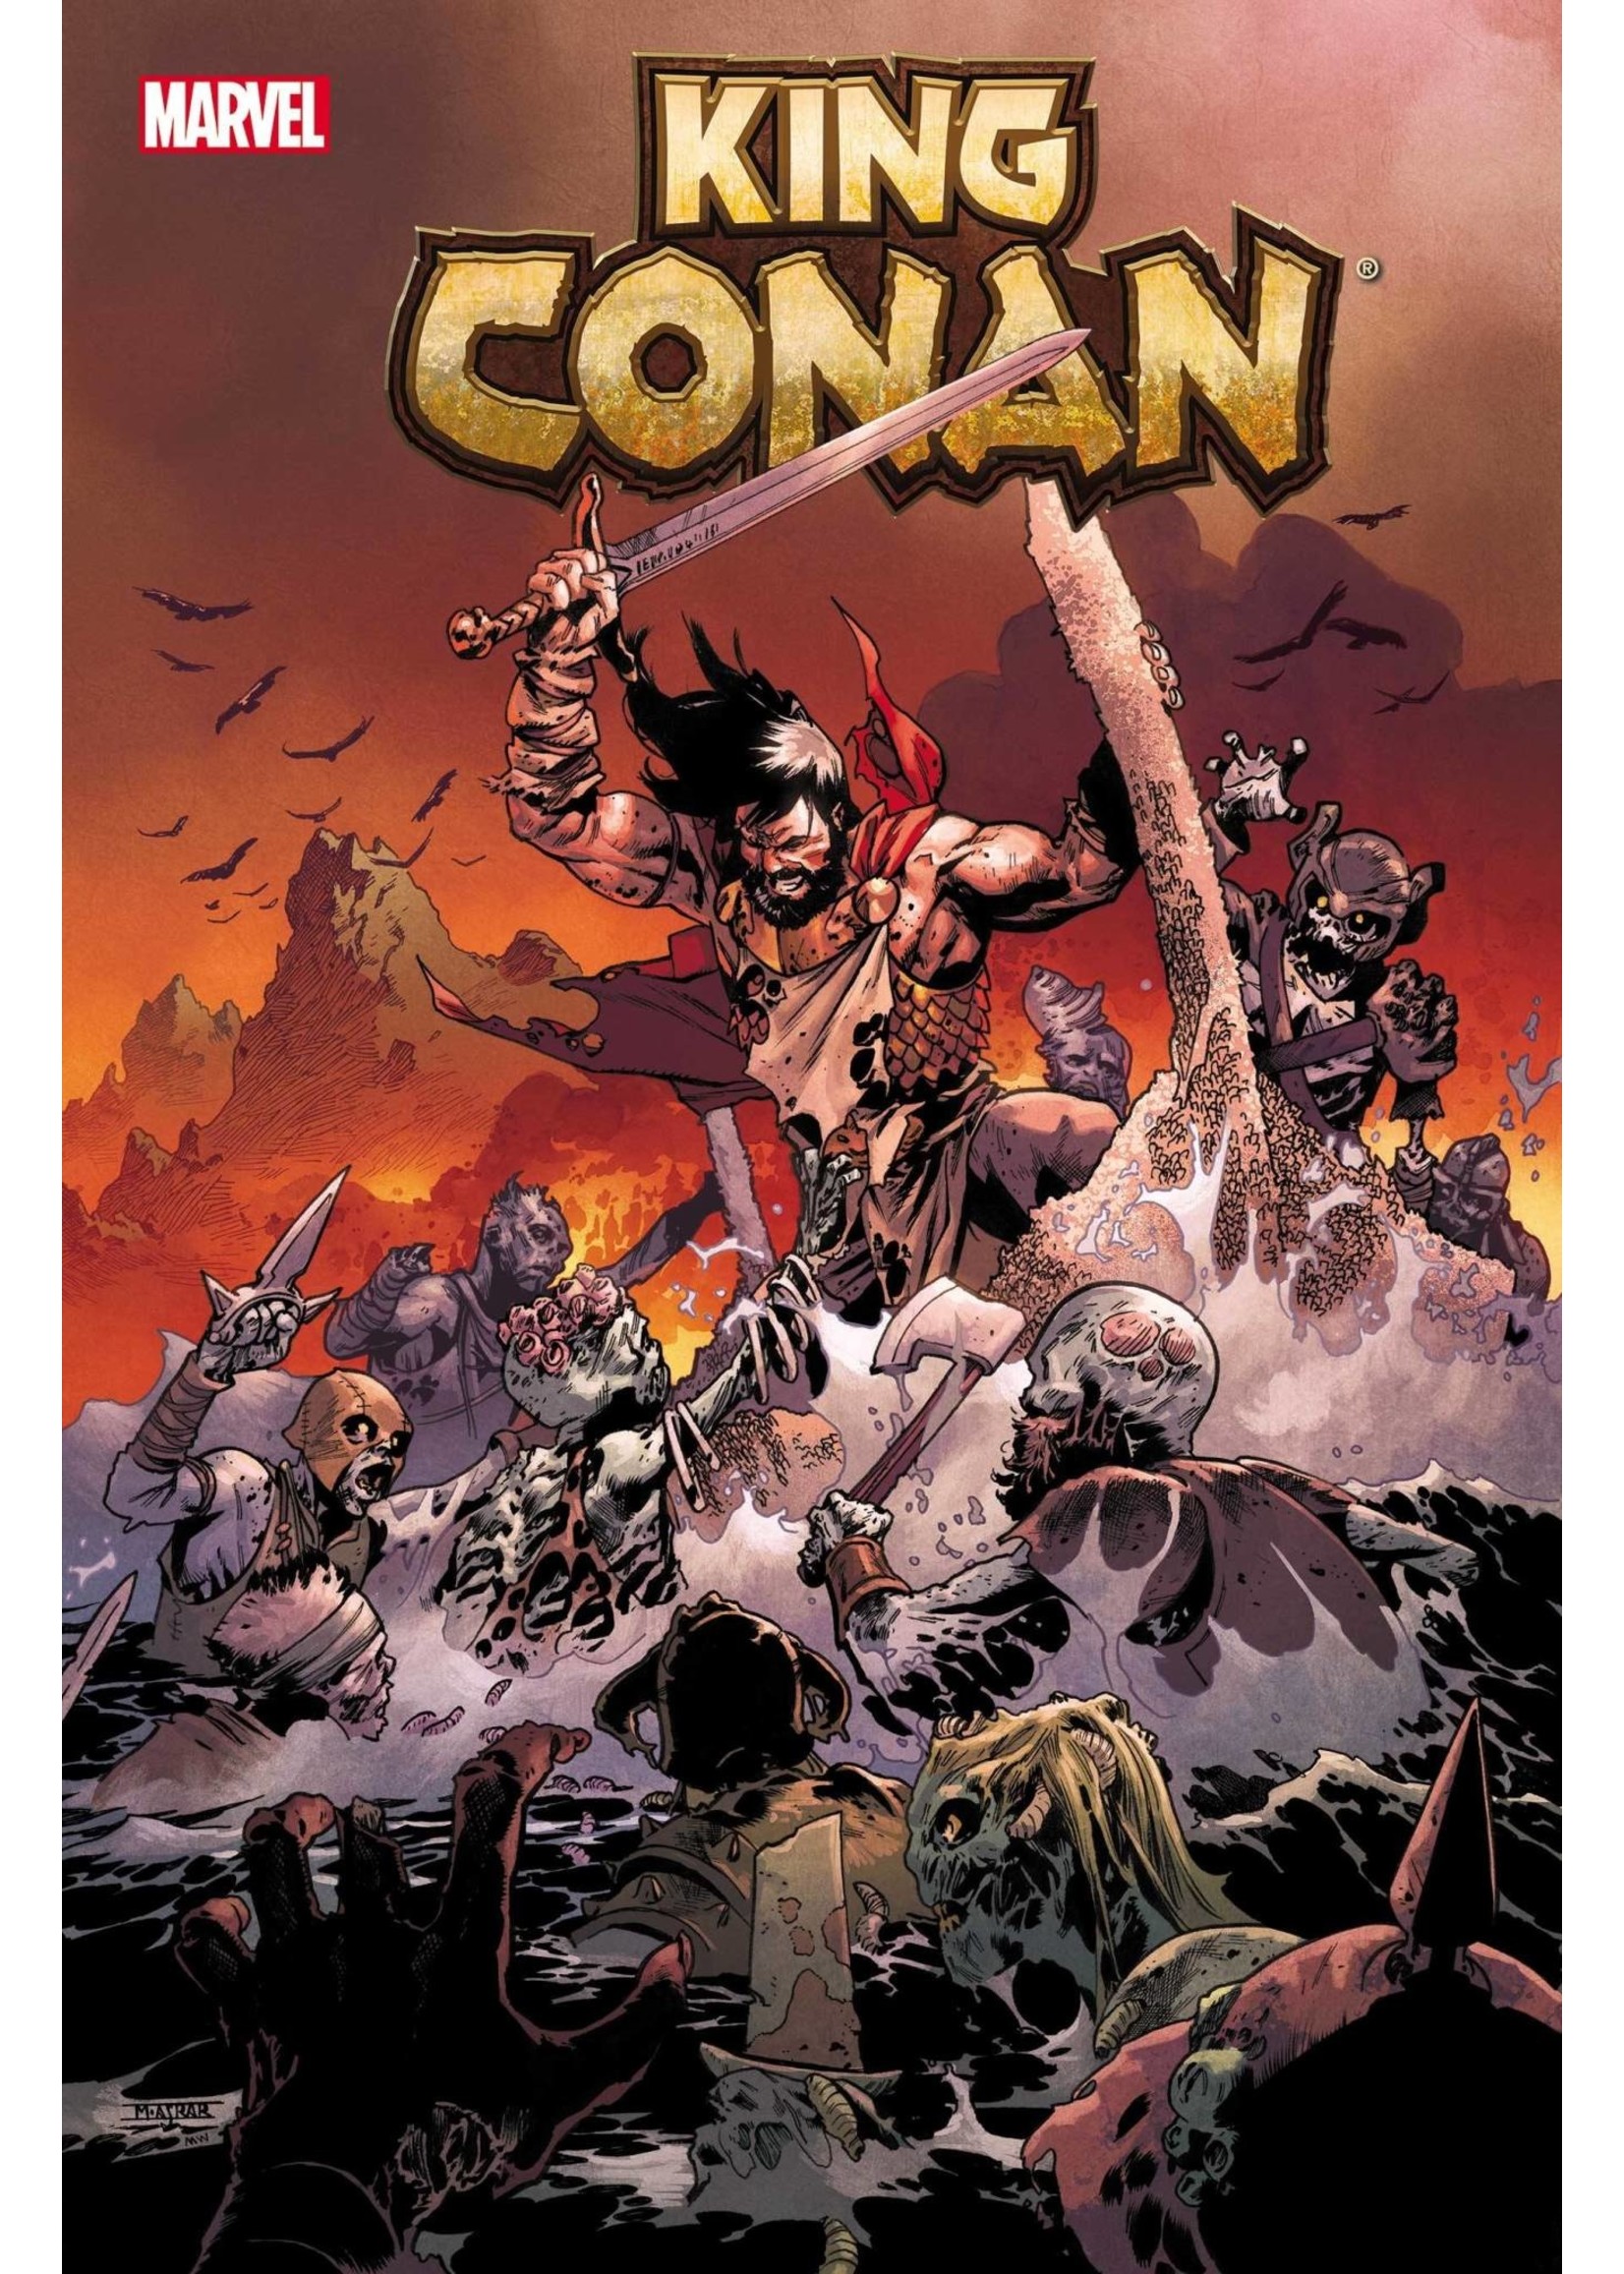 MARVEL COMICS KING CONAN #6